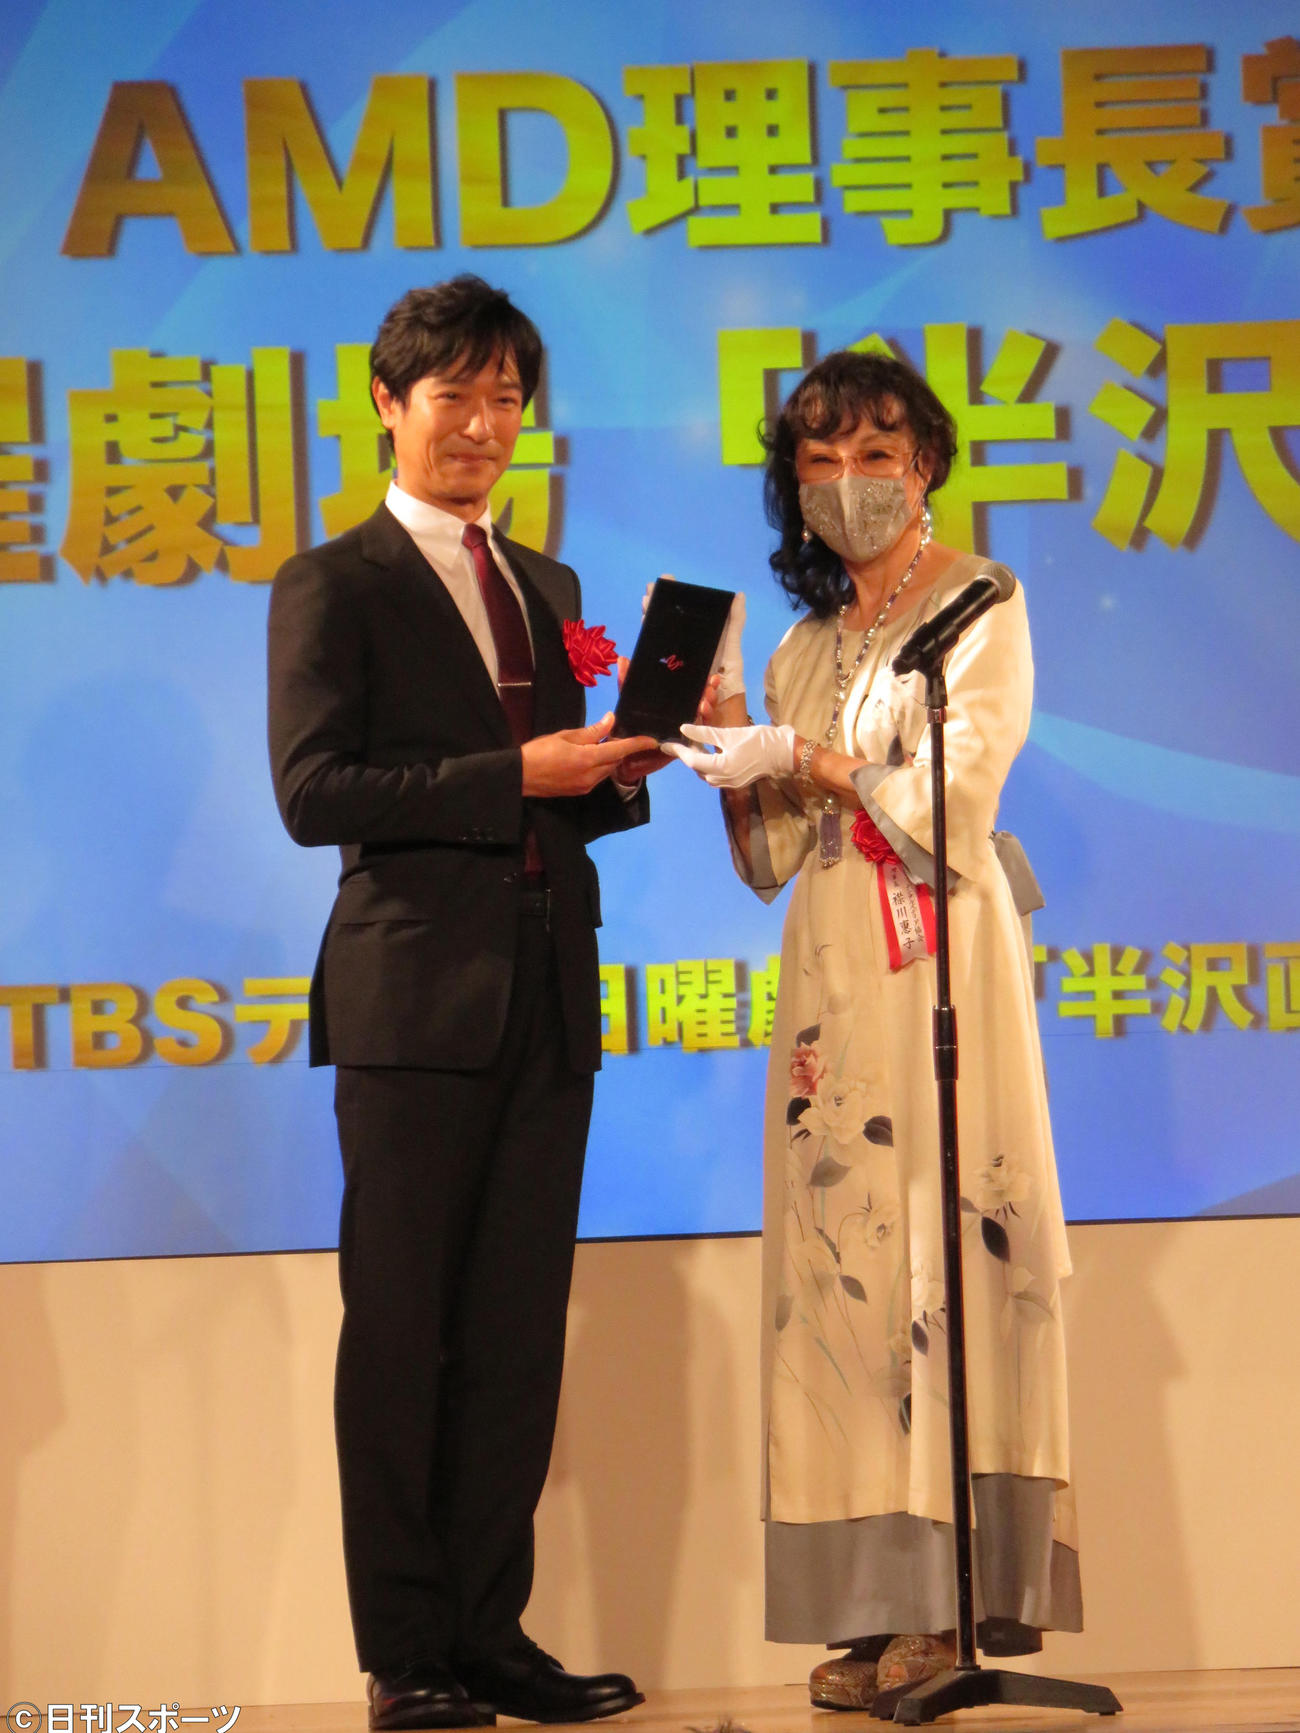 AMDアワードの理事長賞をTBS系ドラマ「半沢直樹」で受賞し、襟川理事長から表彰される主演の堺雅人